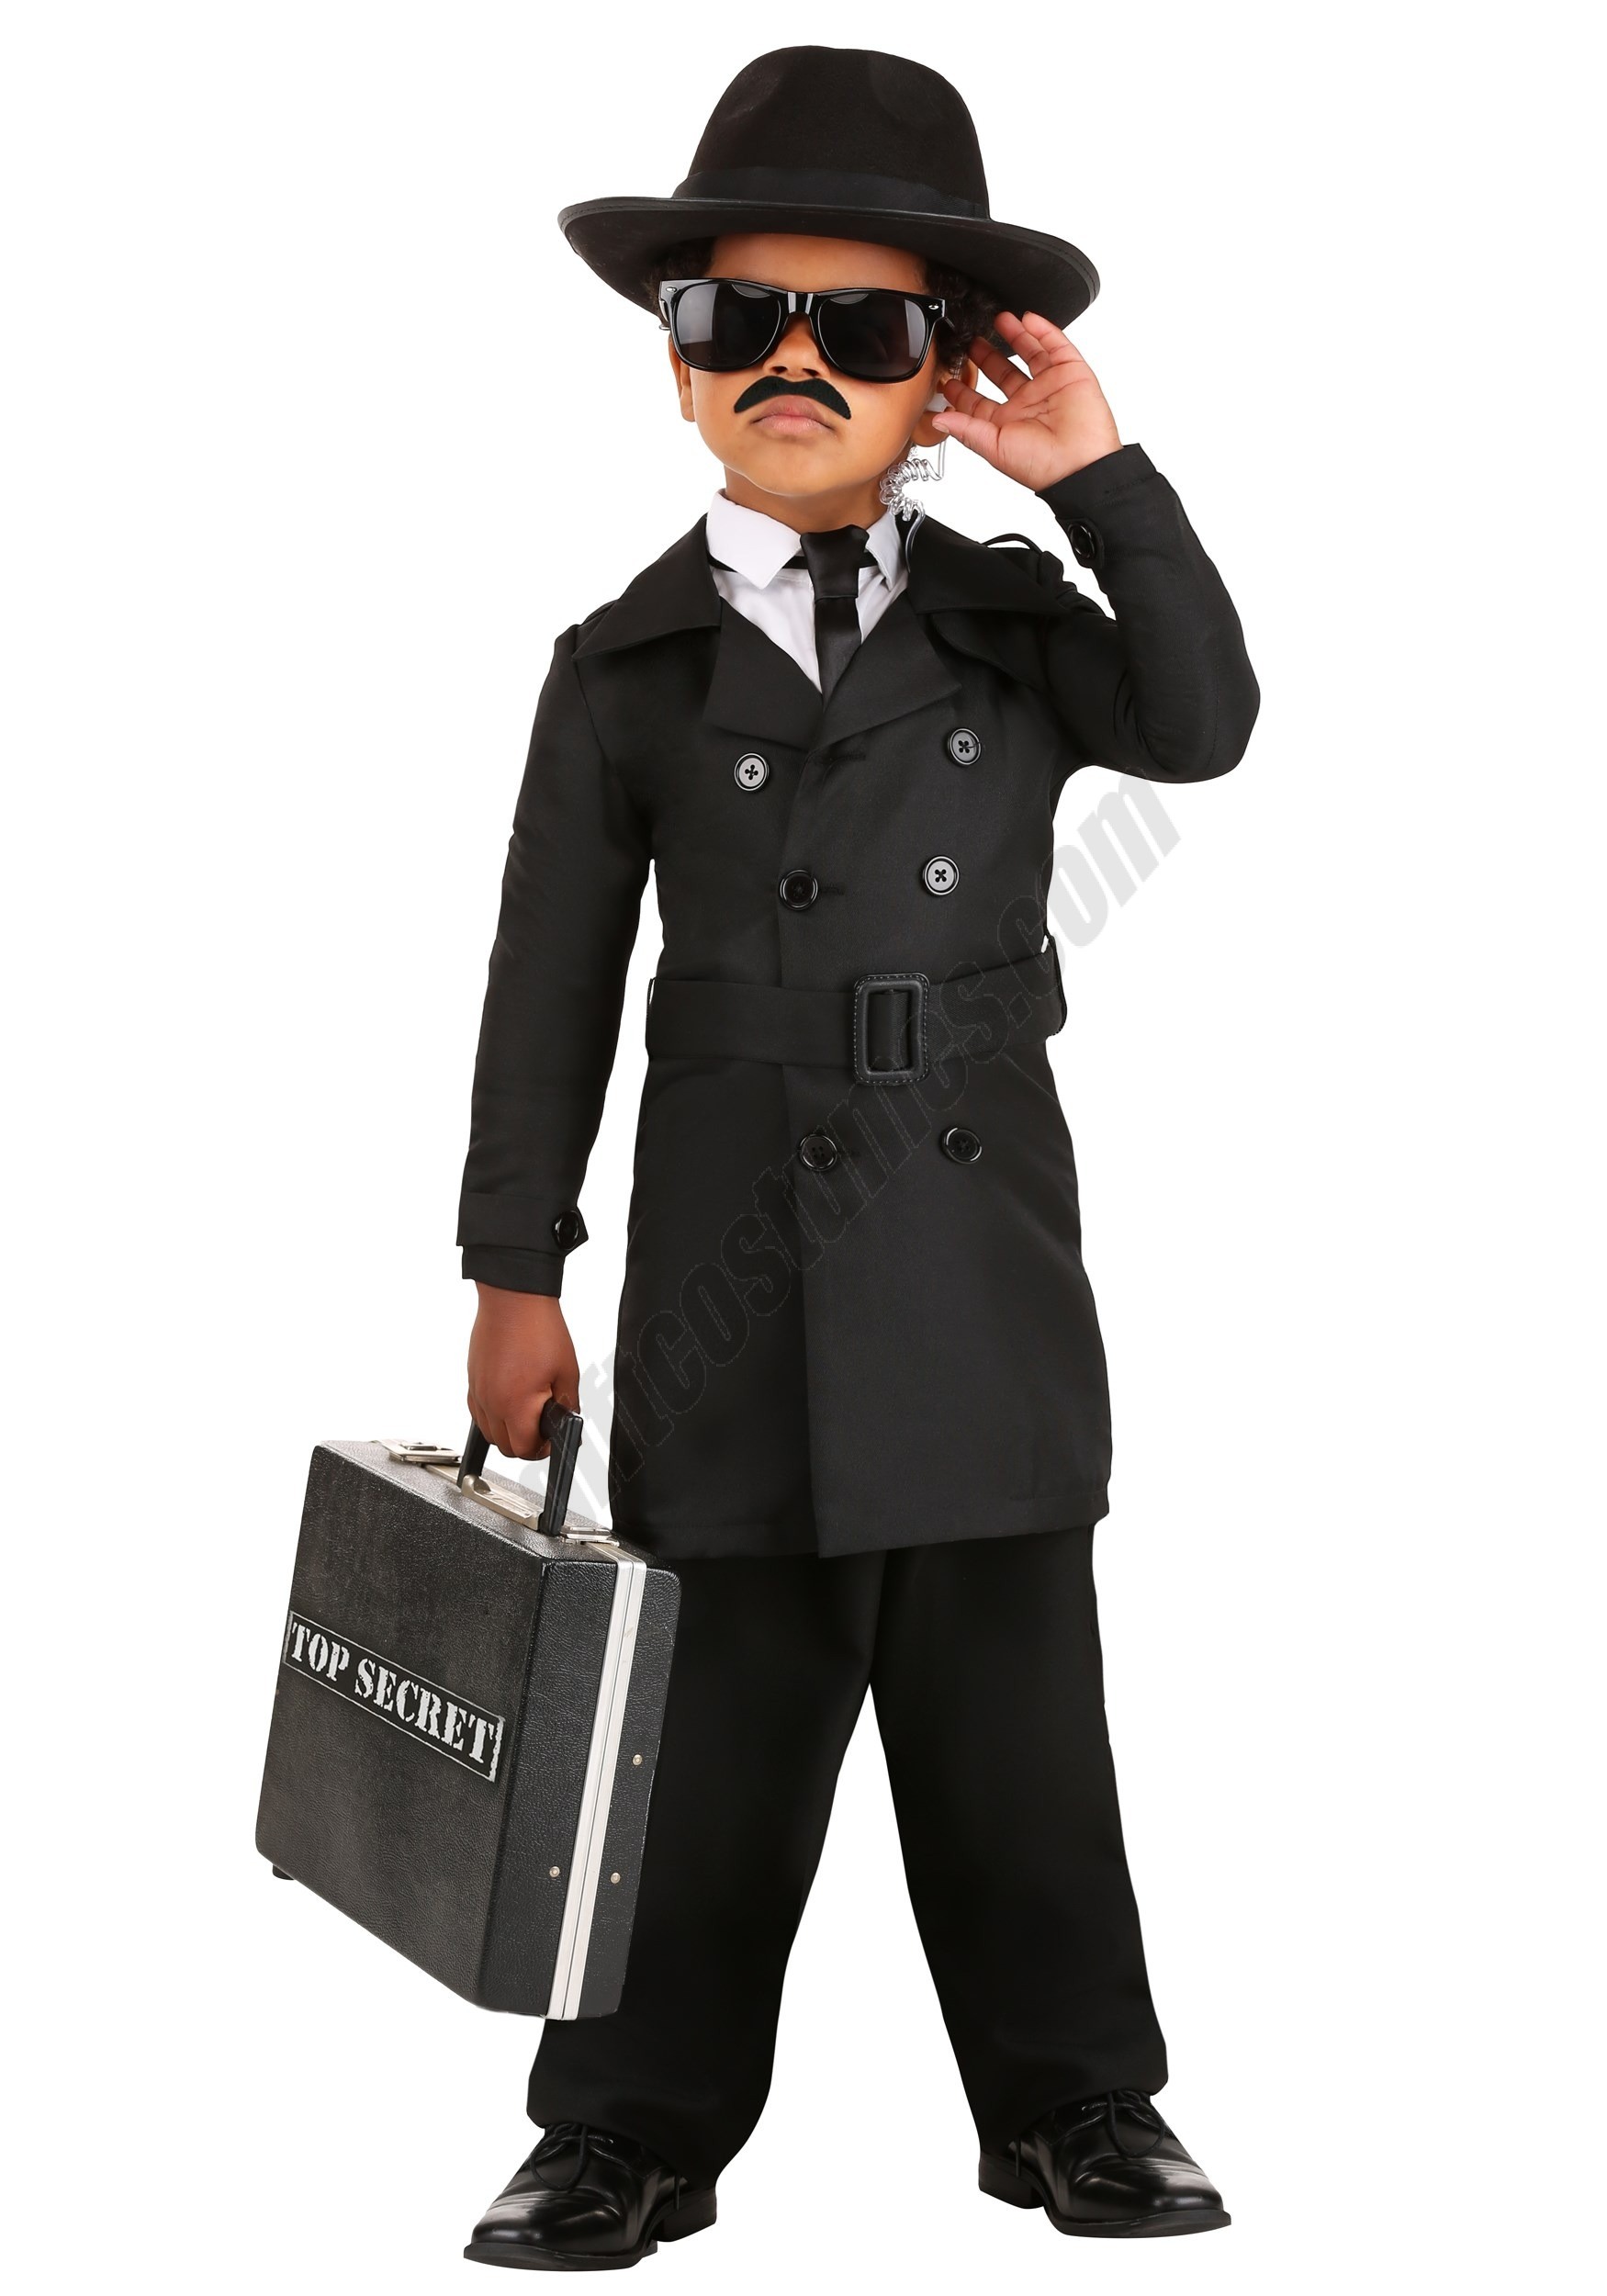 Toddler's Secret Agent Man Costume Promotions - Toddler's Secret Agent Man Costume Promotions